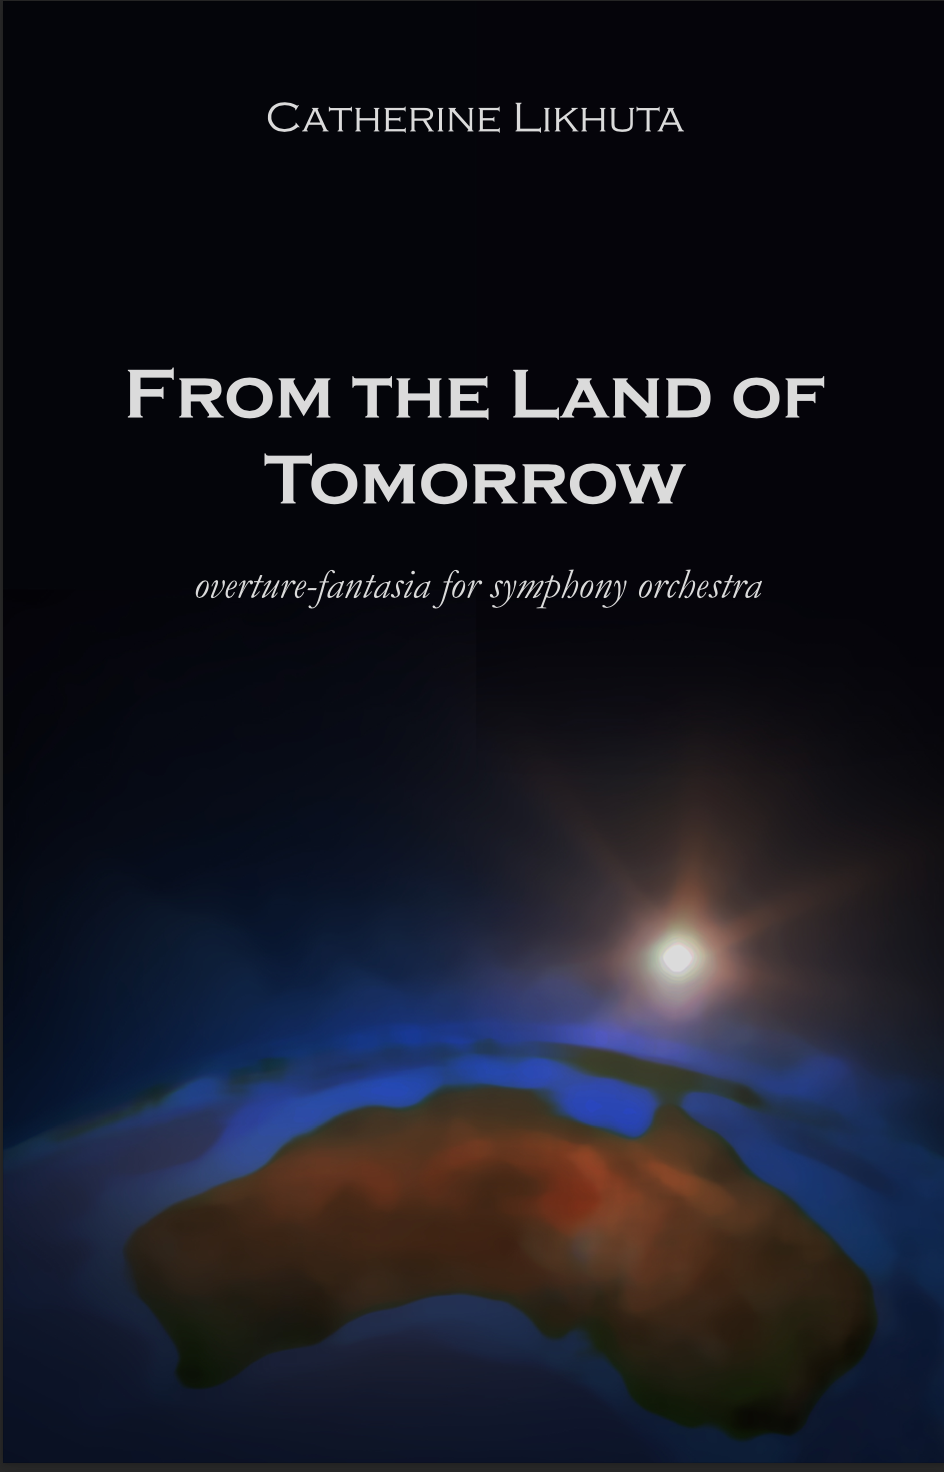 Land Of Tomorrow by Catherine Likhuta